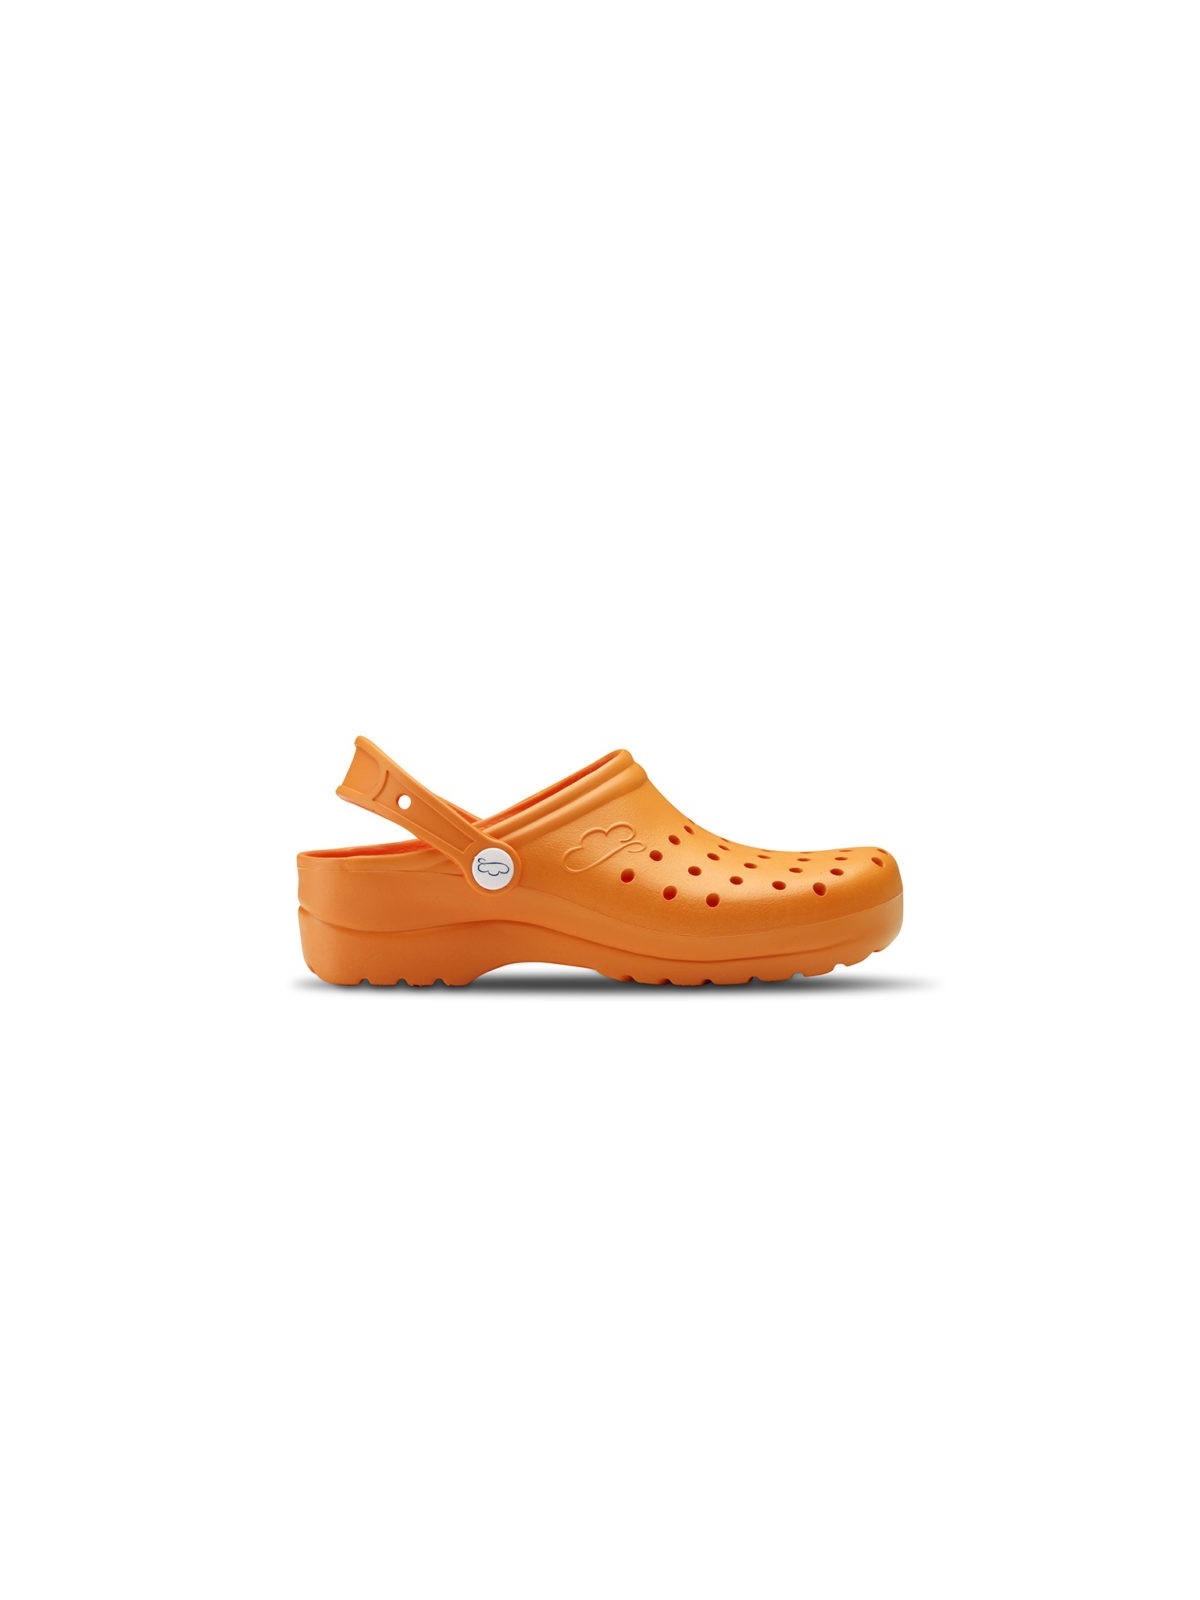 Vista lateral zueco gruyere naranja Feliz Caminar